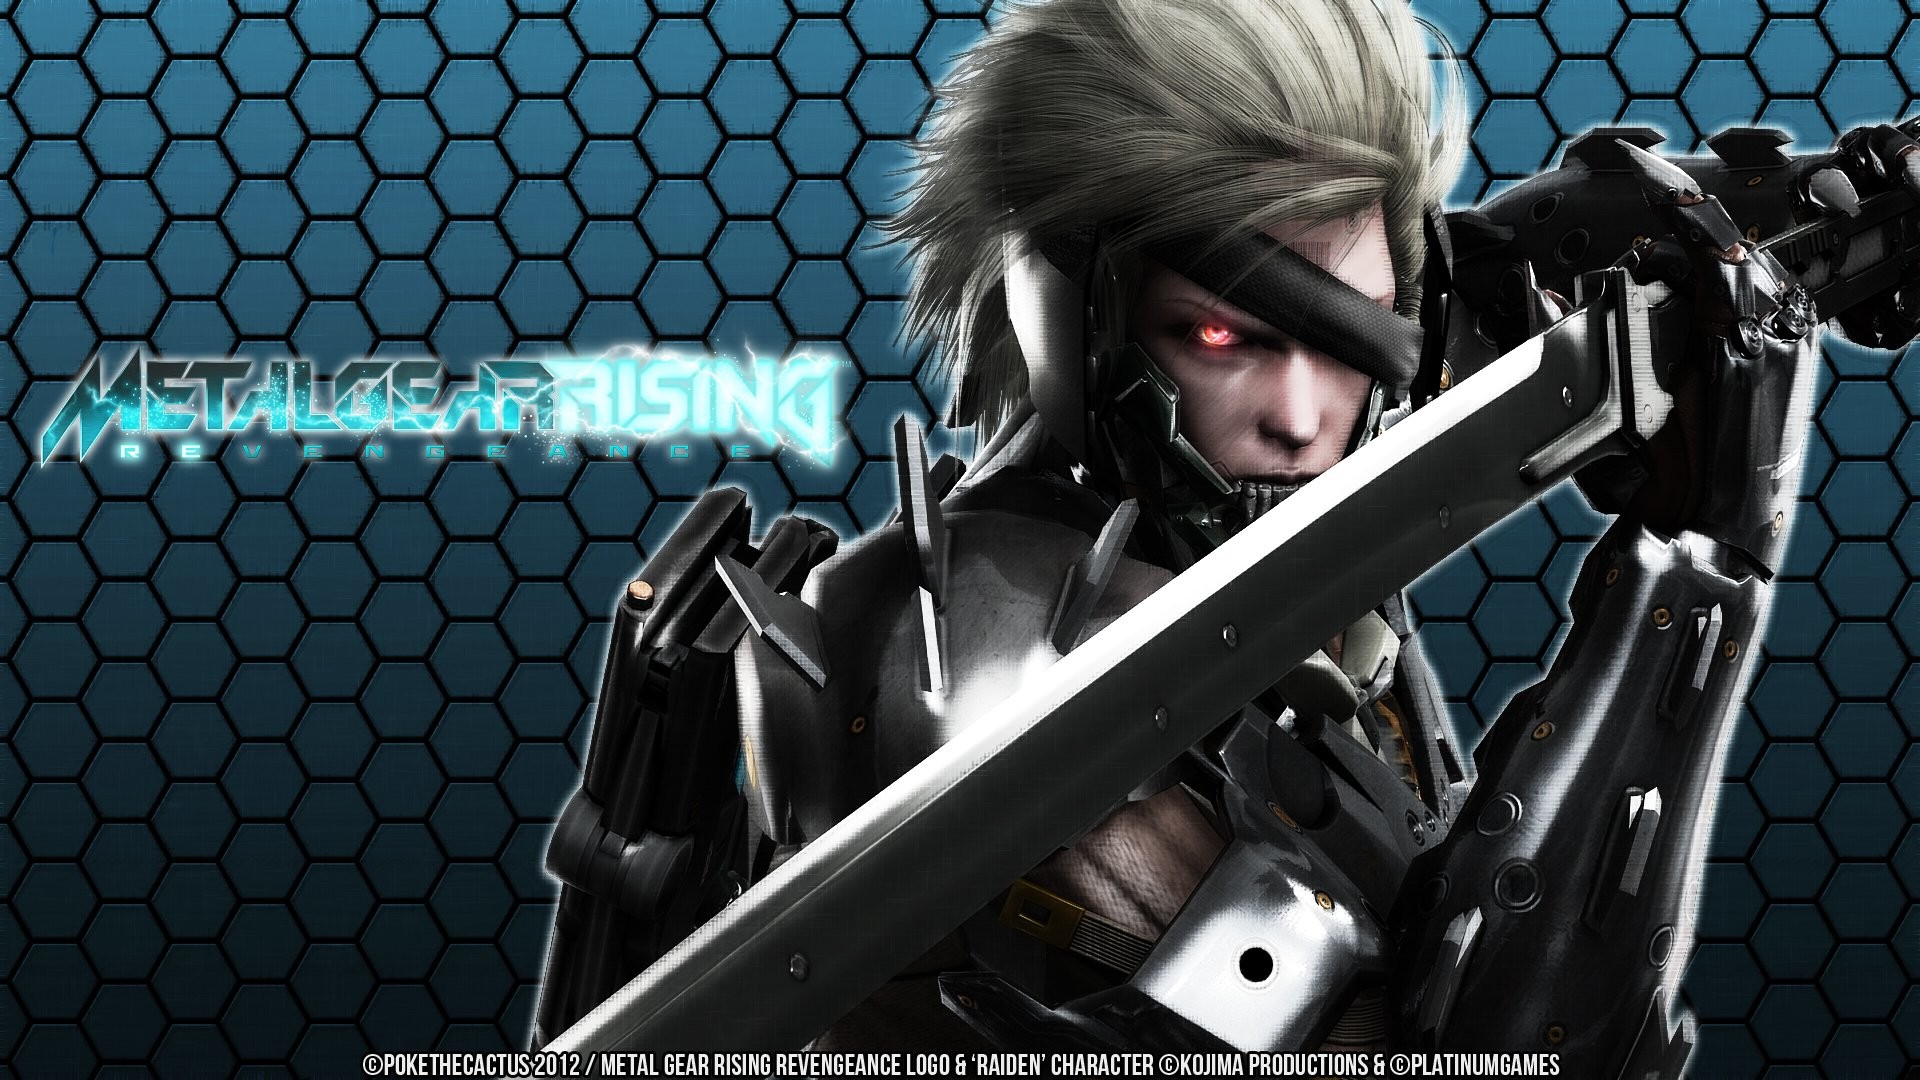 1920x1080 Video Game - Metal Gear Rising: Revengeance Wallpaper